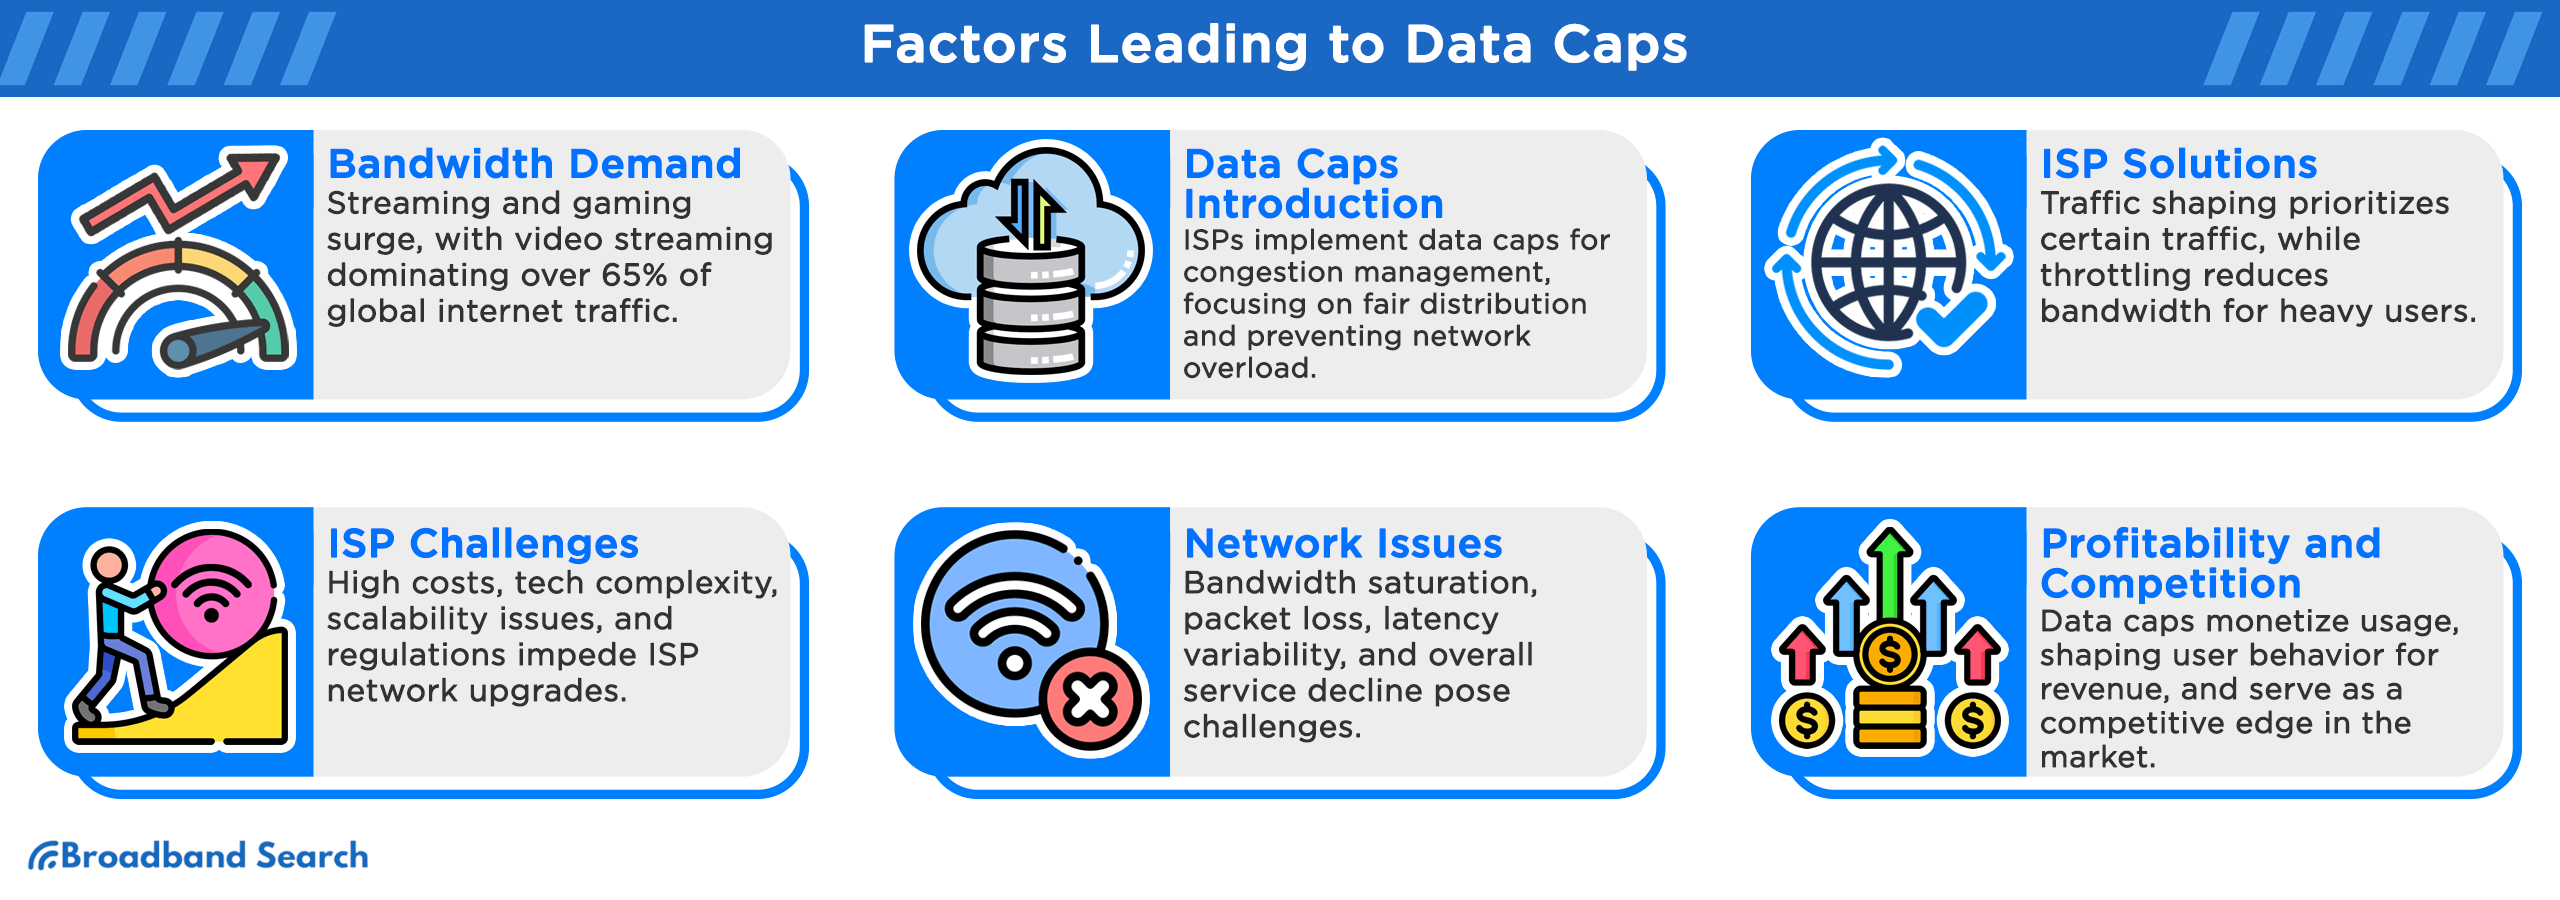 Factors leading to data caps